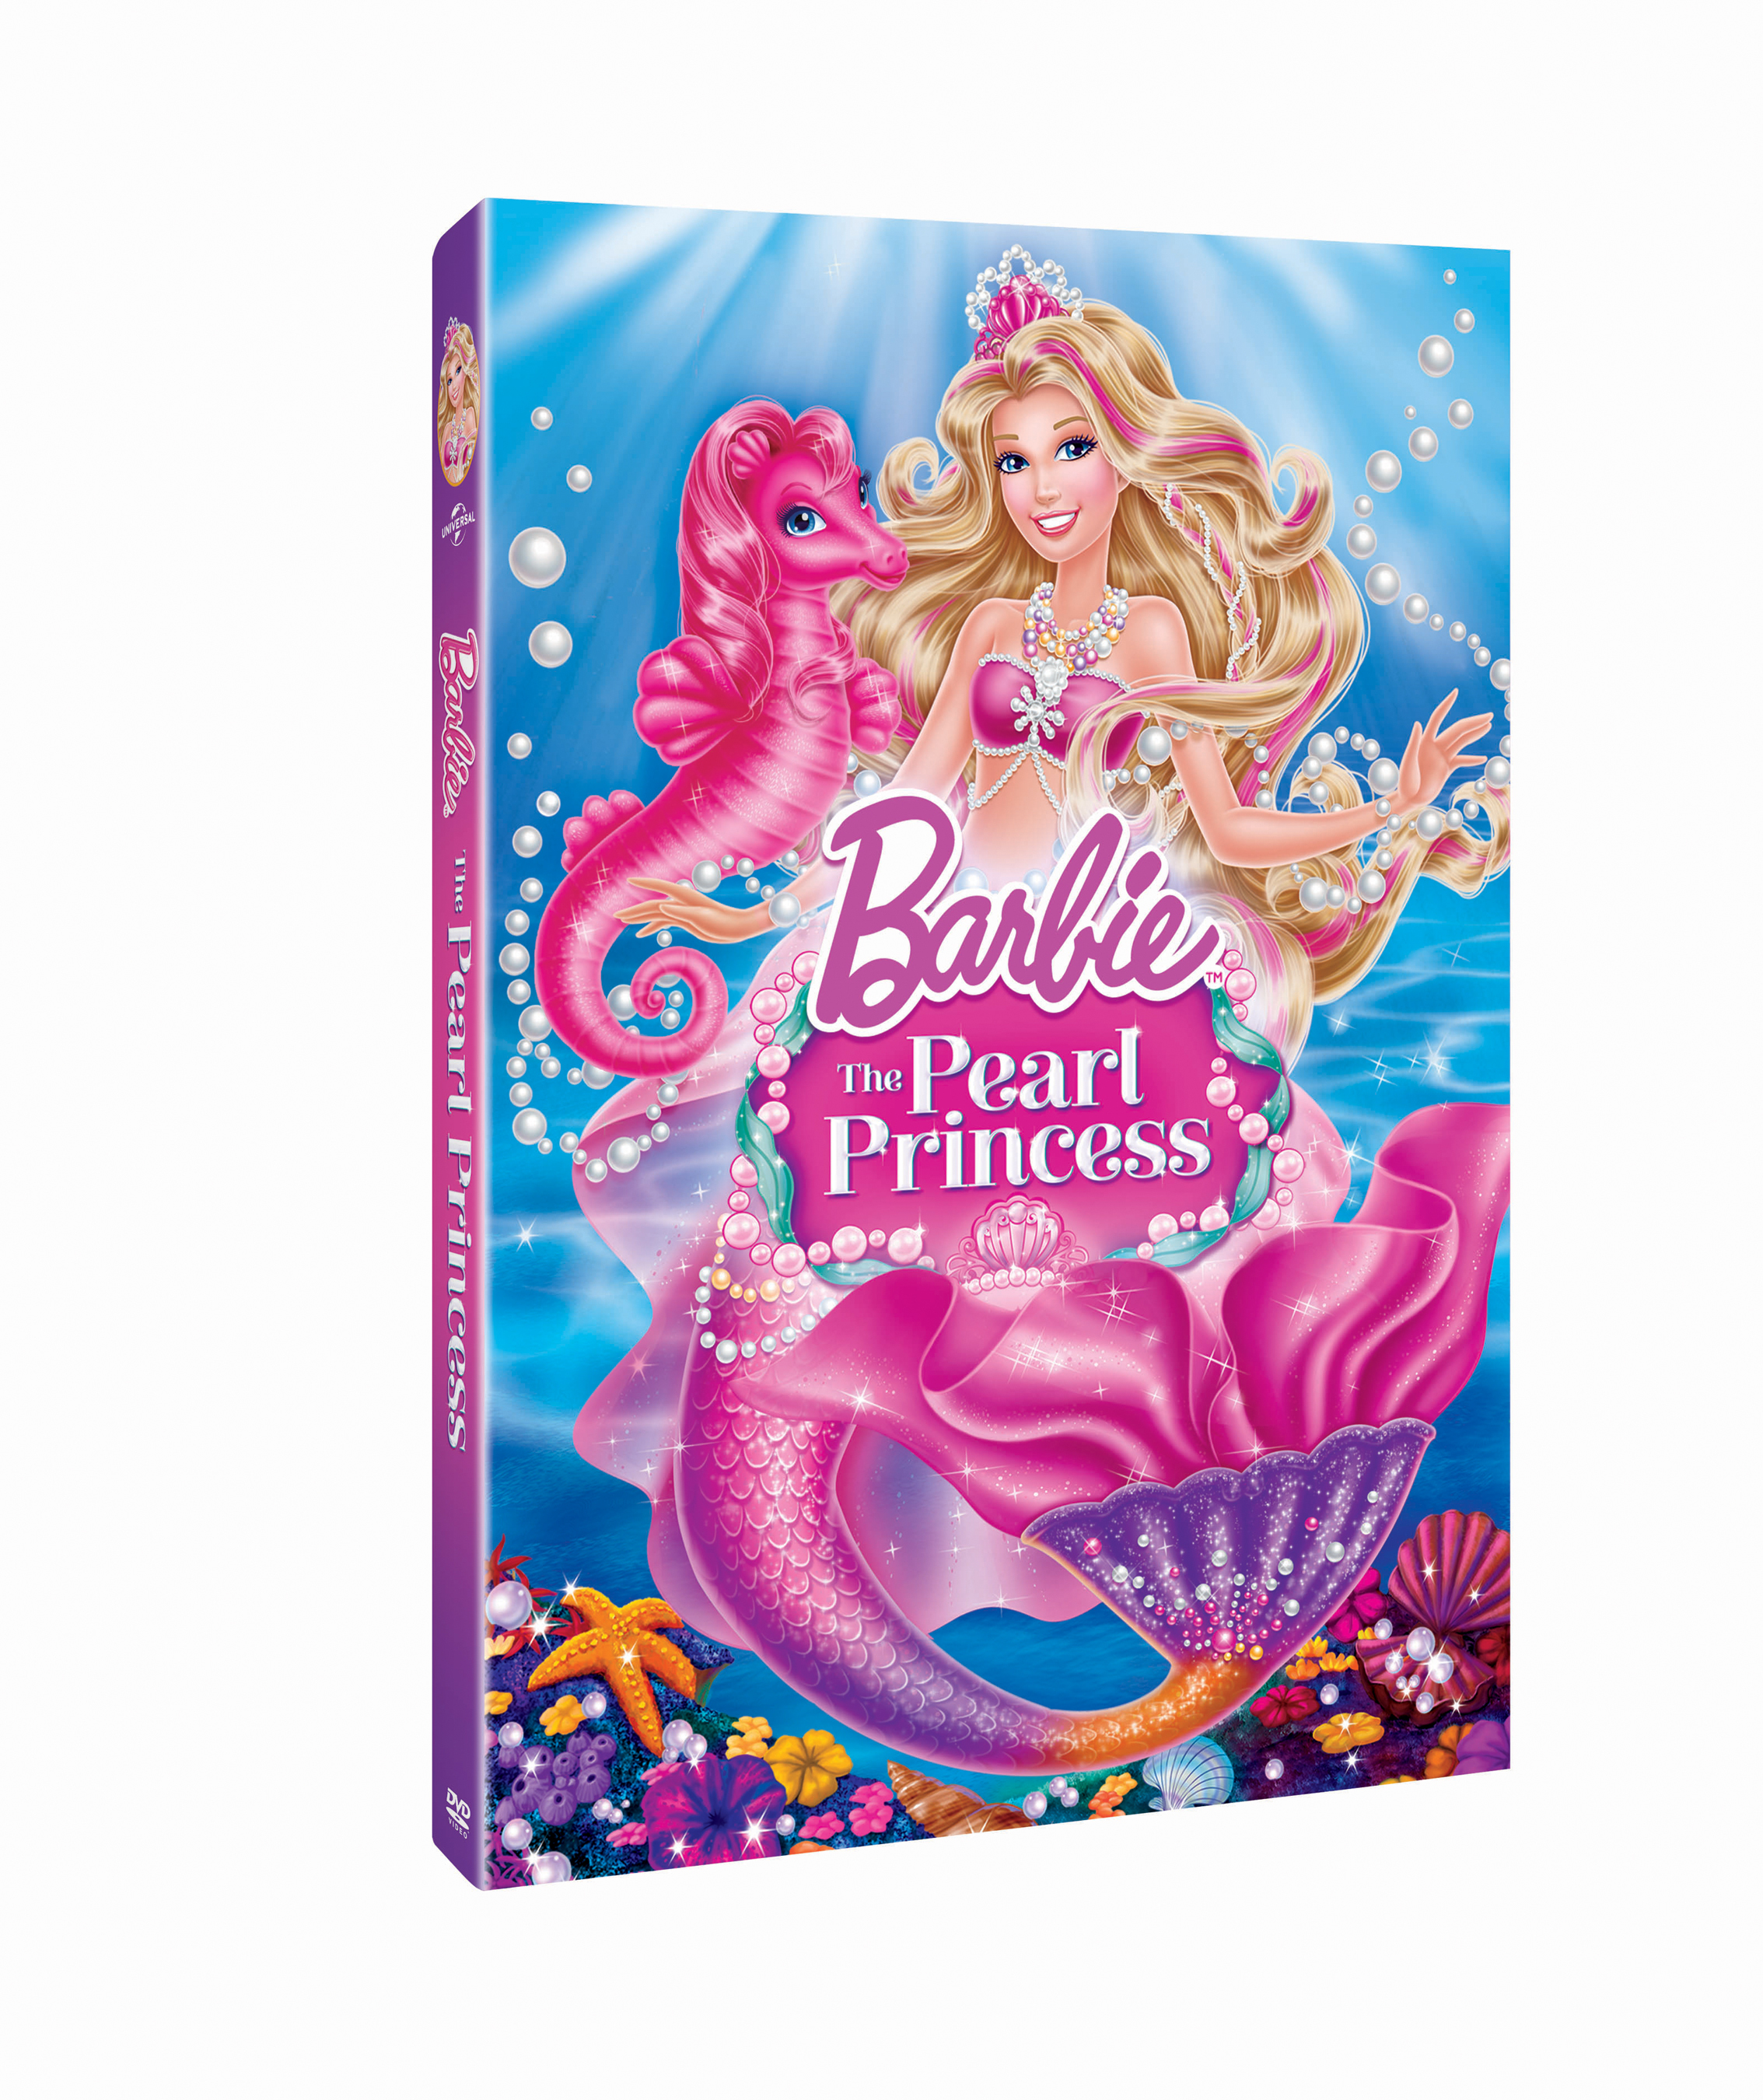 the pearl princess full movie